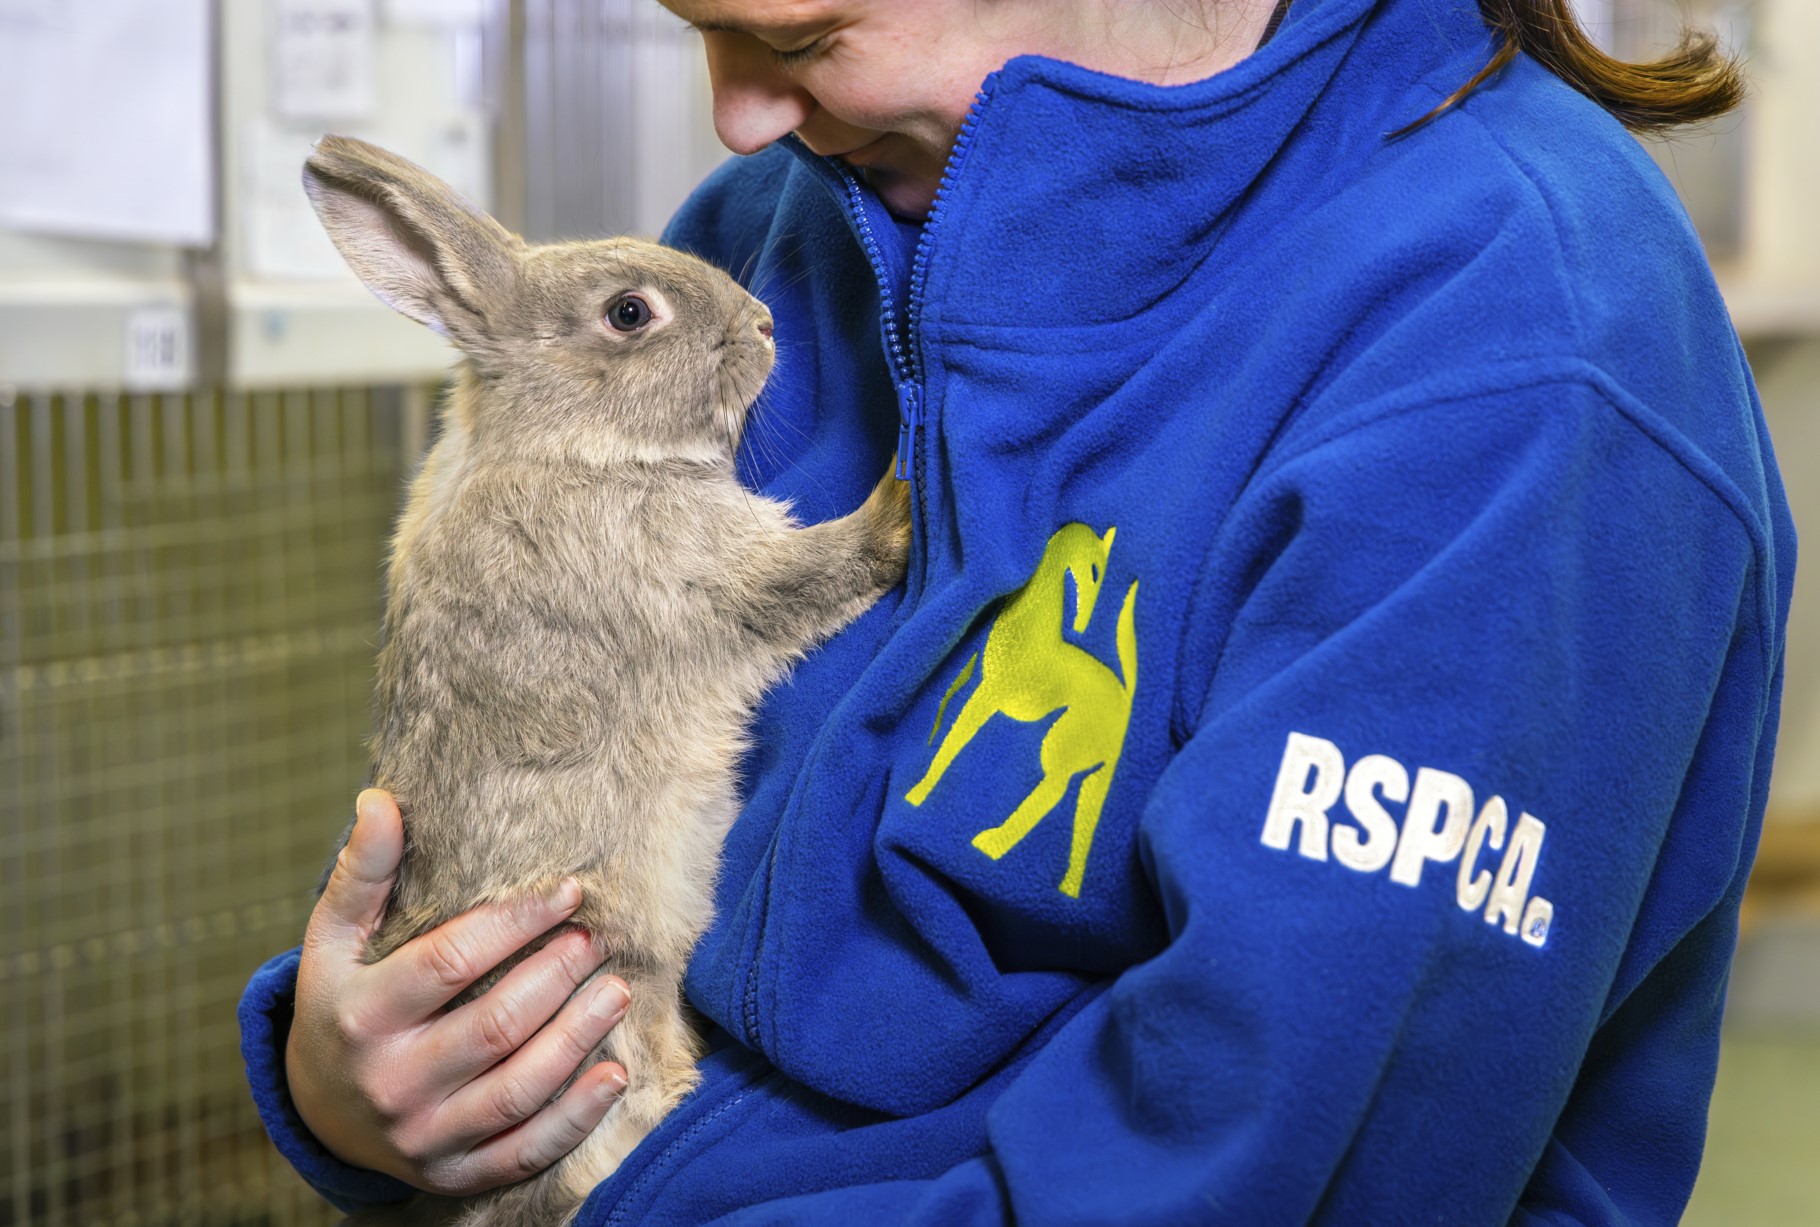 holding rabbit